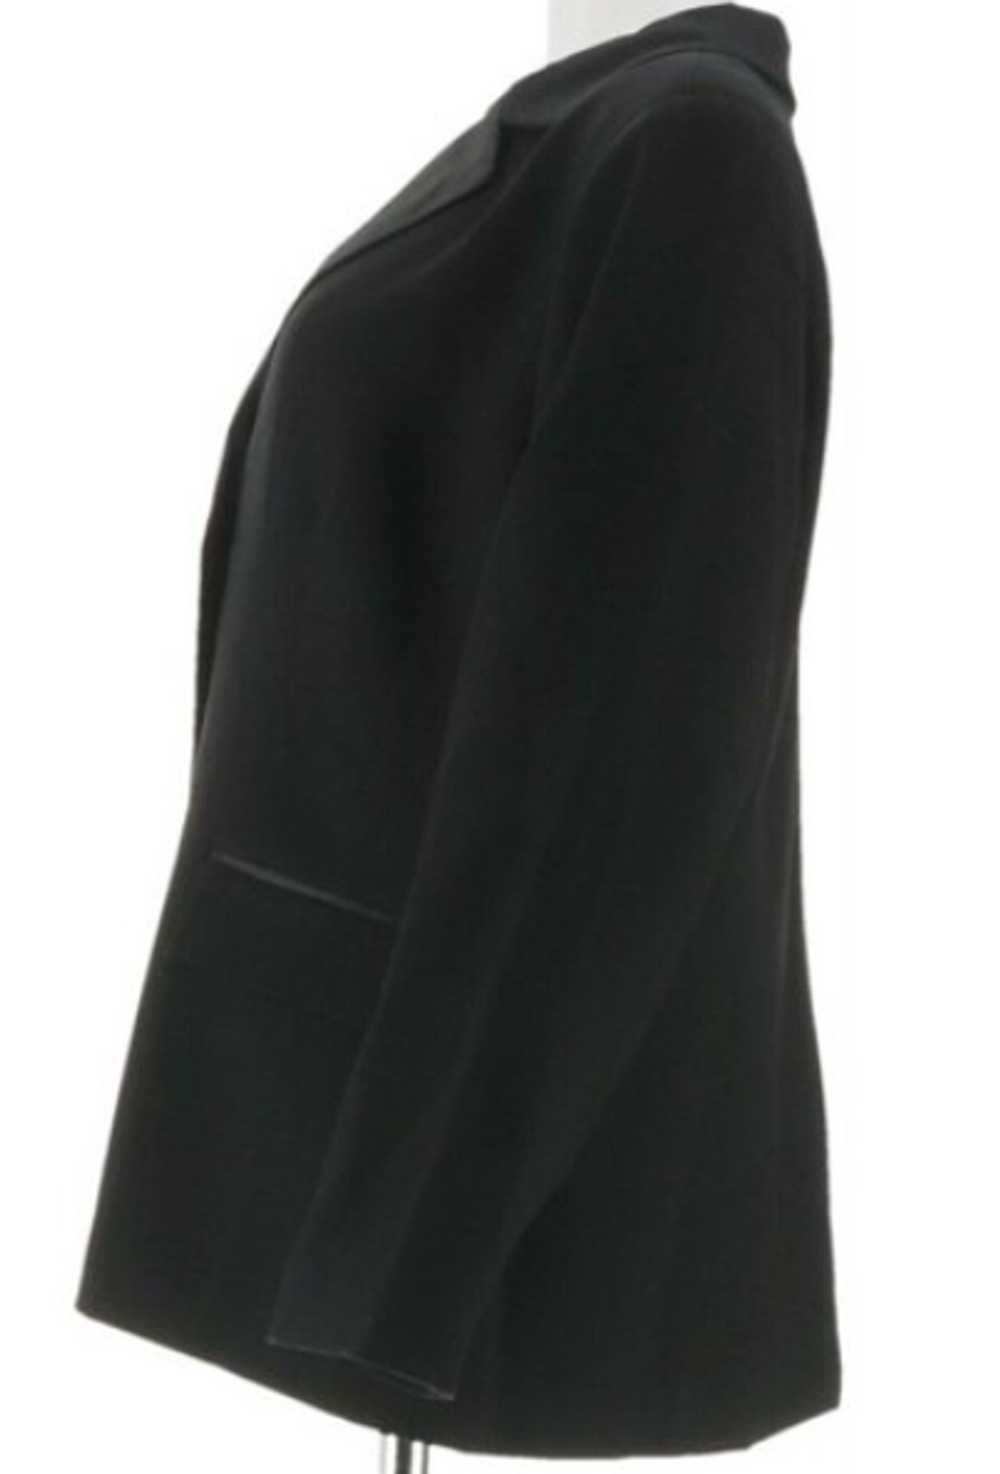 Linea by Louis Dell'Olio Tuxedo Jacket Black - image 3